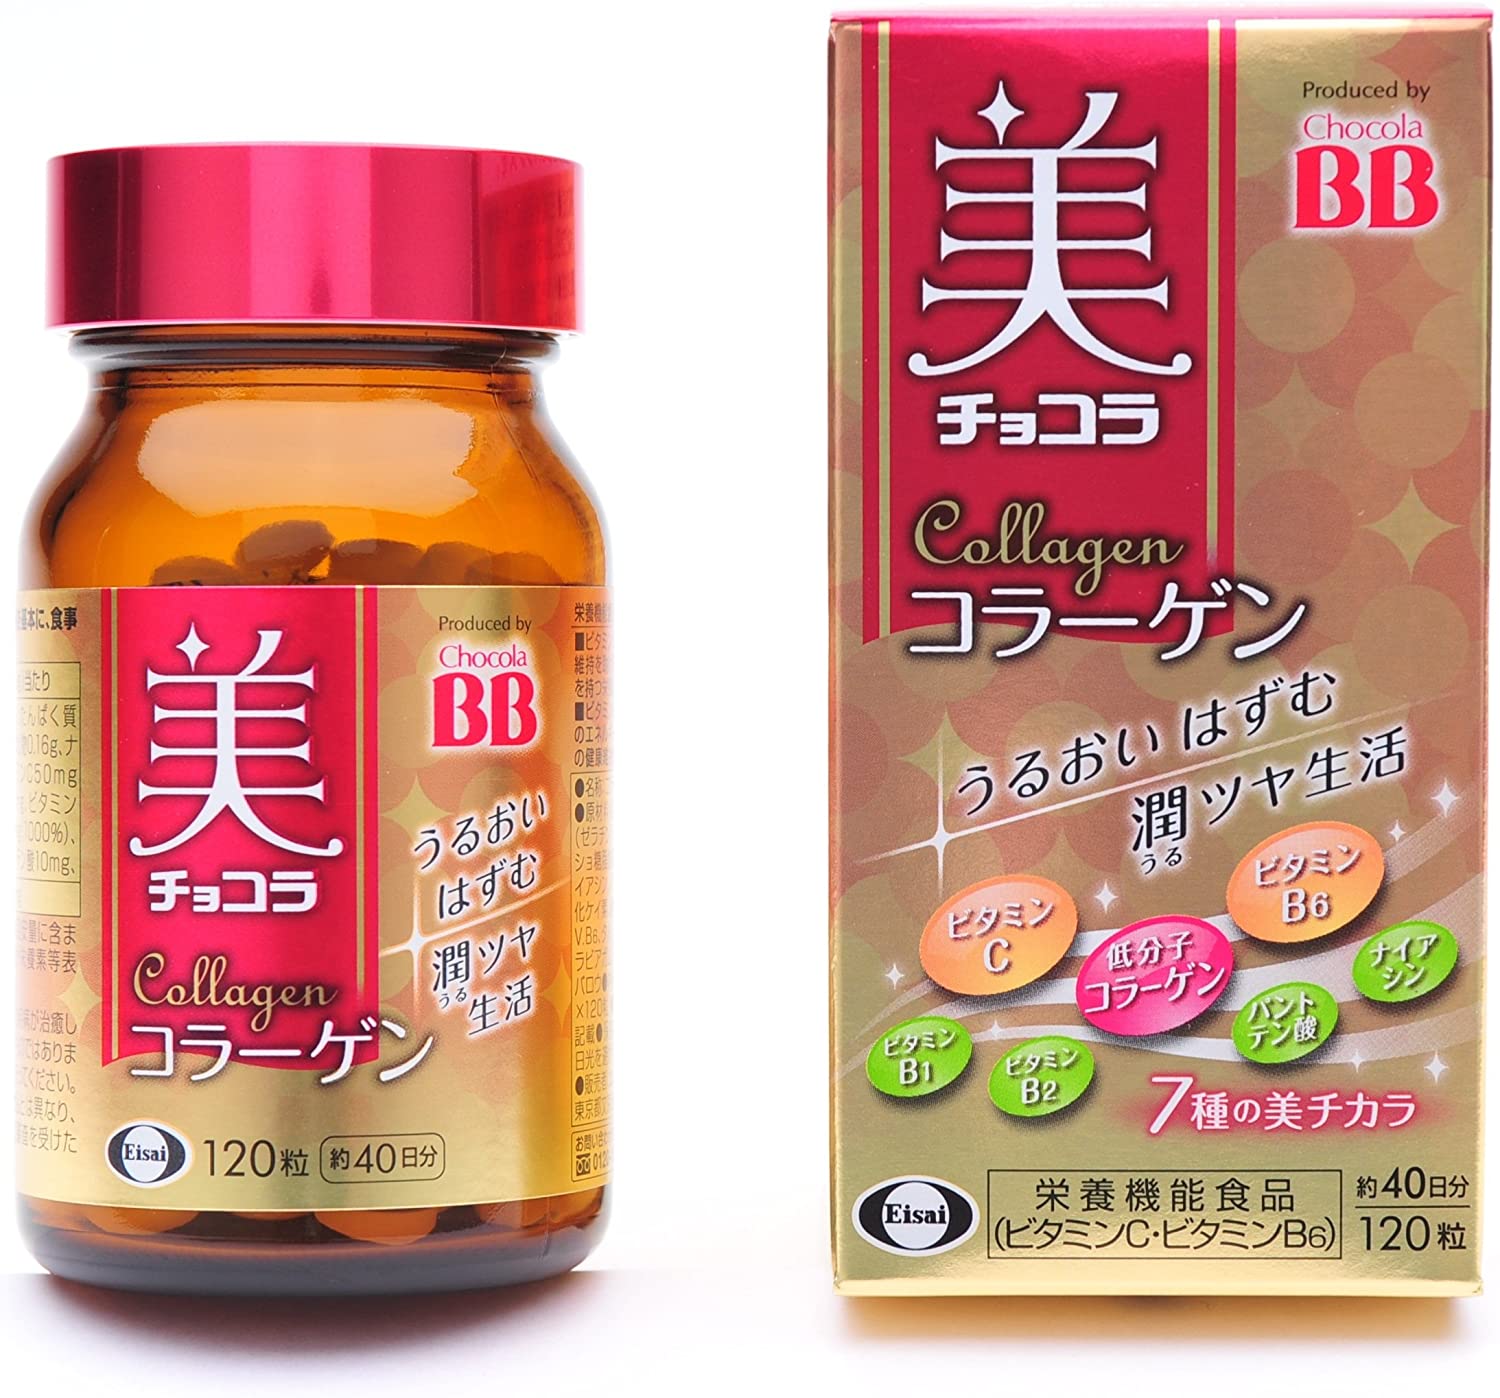 Вв коллаген. Витамины японские Chocola BB. Коллаген Collagen Beauty Complex. Коллаген японский BB. Коллаген BB (Япония ).